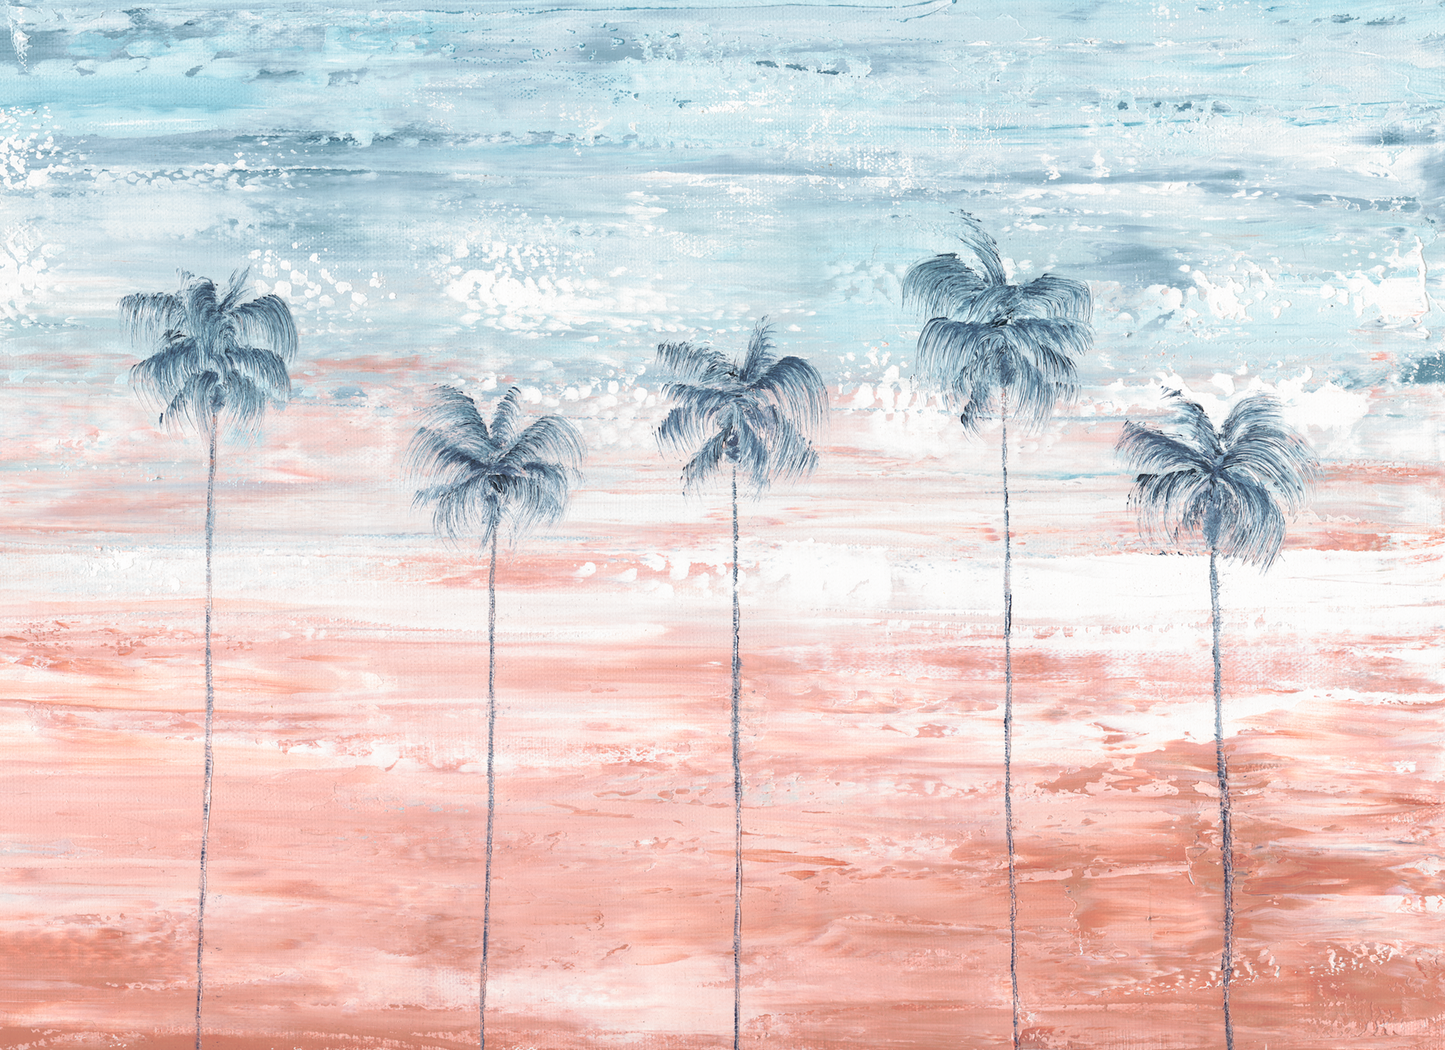 Beachy Keen (Sunshine Nostalgia Series) - Original Oil Painting on Canvas 18x24 inches